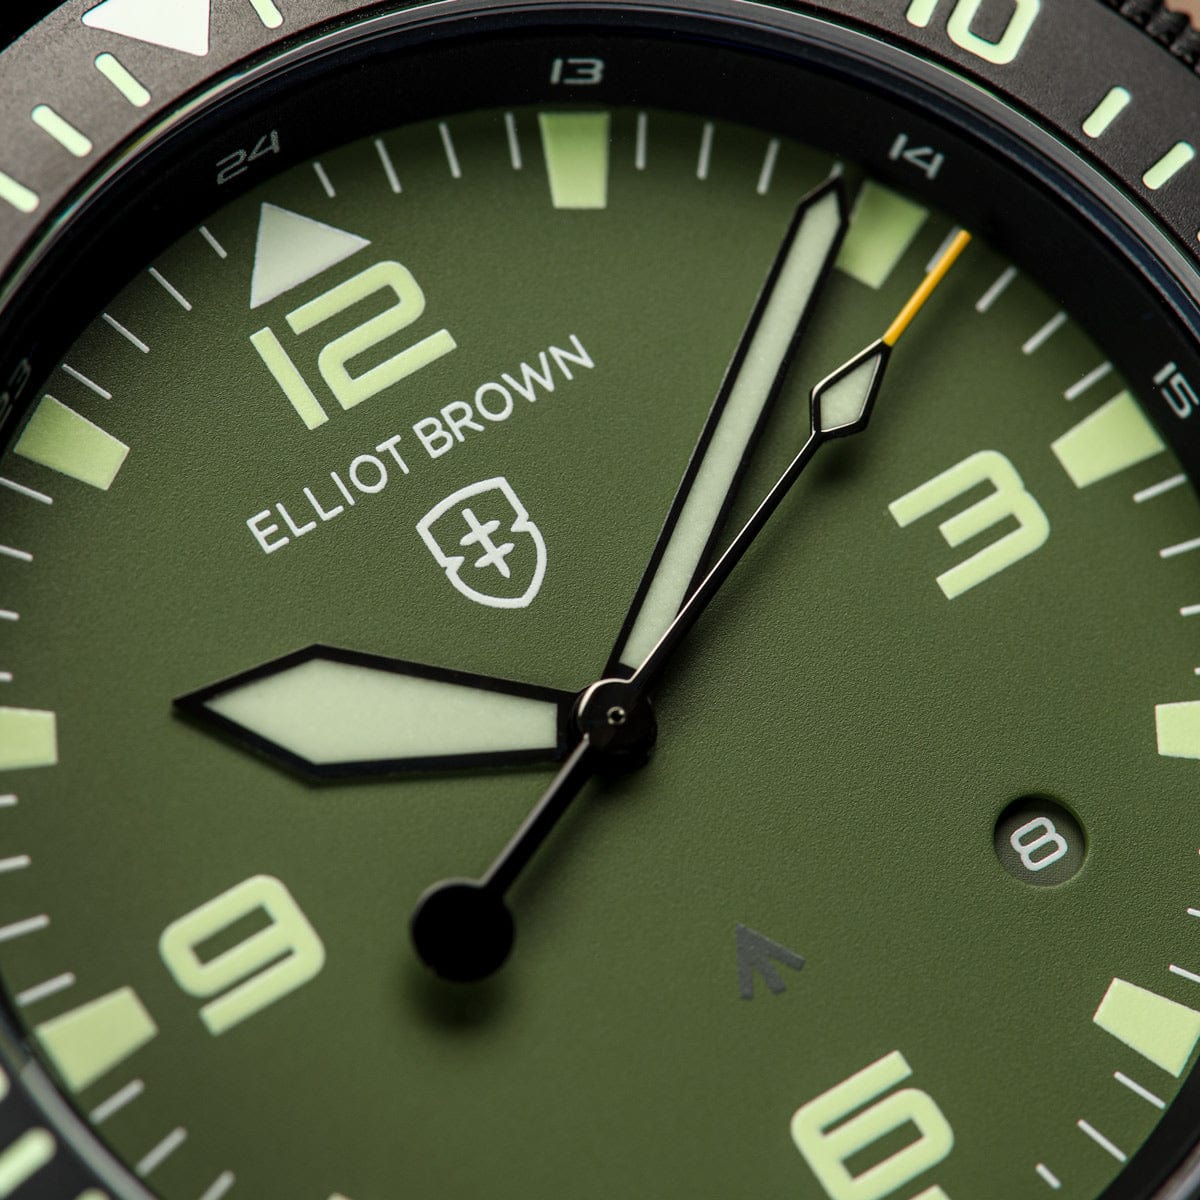 Elliot Brown Holton Professional 101-002-R04 - Olive green